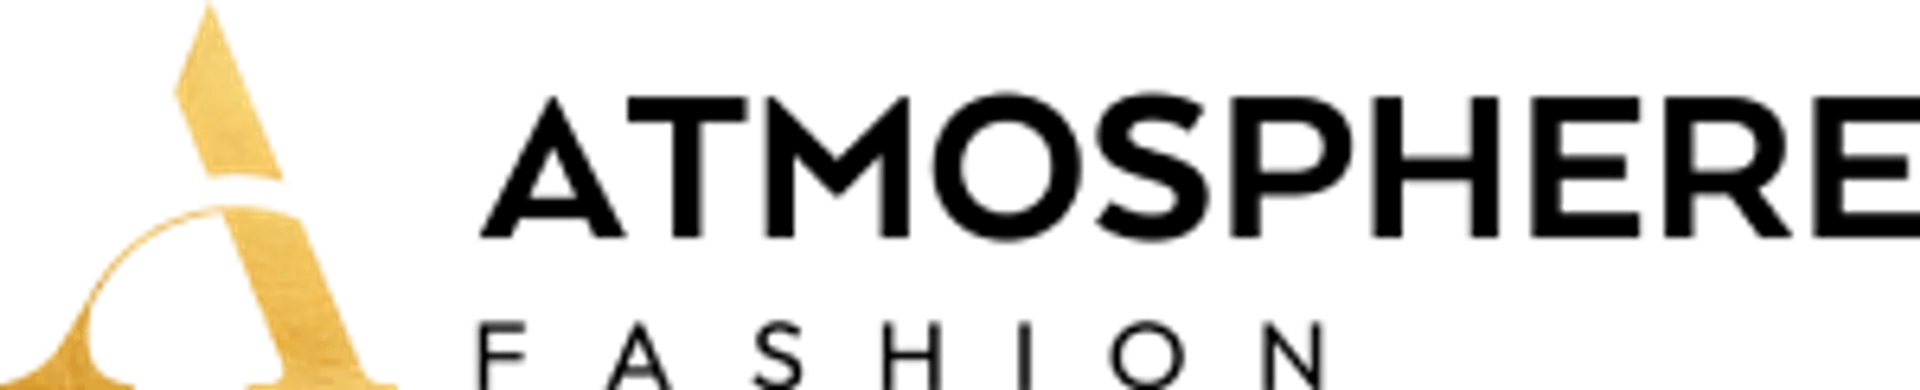 ATMOSPHERE logo